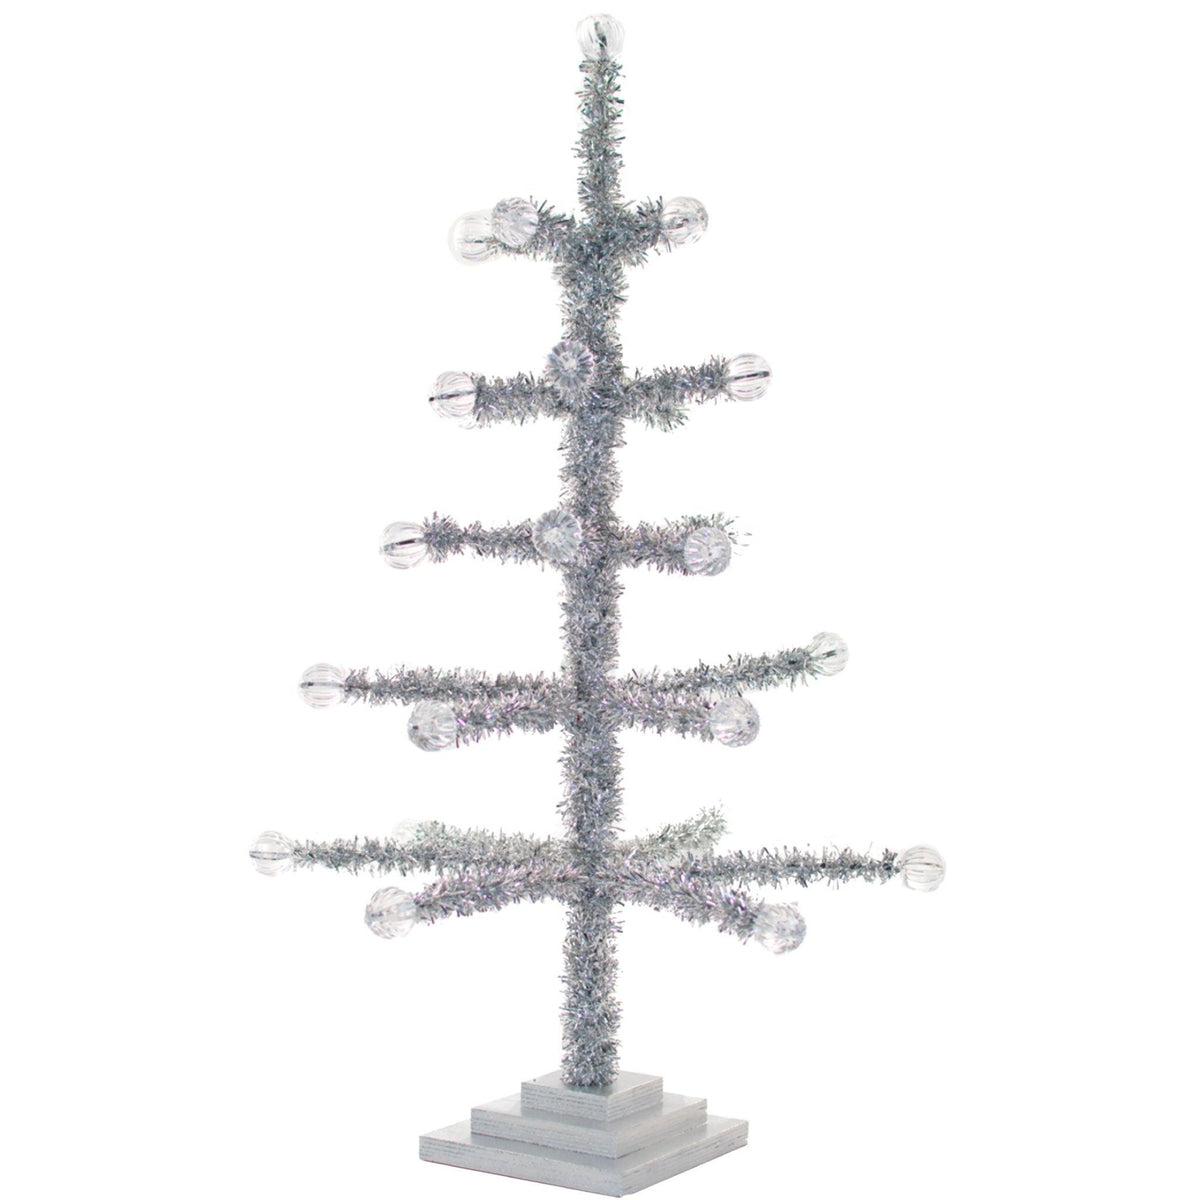 Lee Display's 3FT Tall Silver Tinsel Merchandising and Display Tree on sale at leedisplay.com